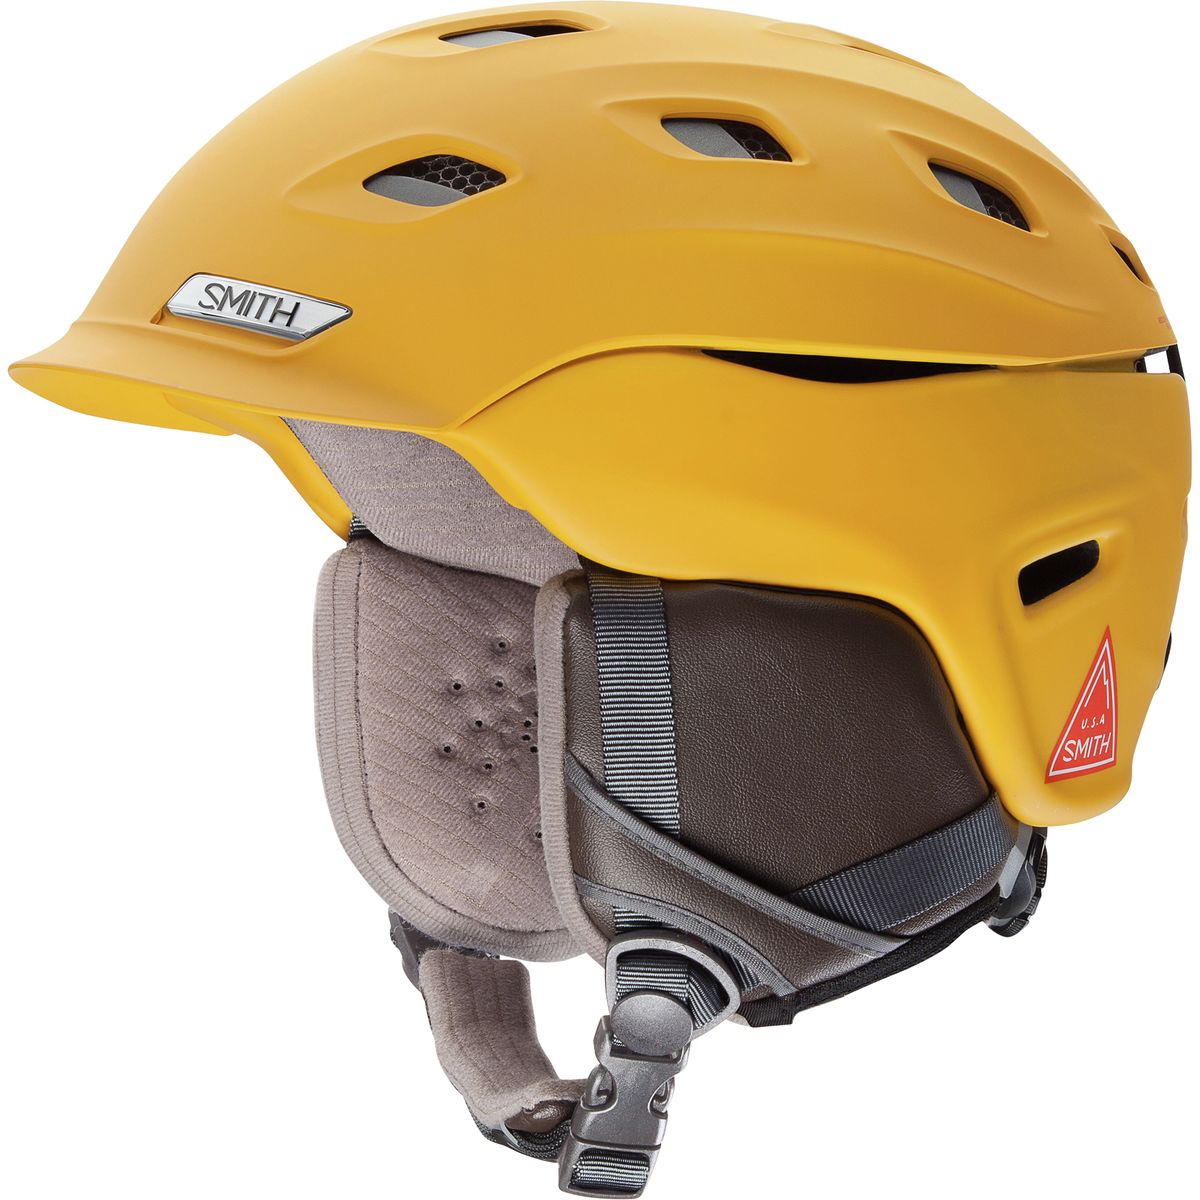 Smith Vantage Helmet Matte Mustard Conditions